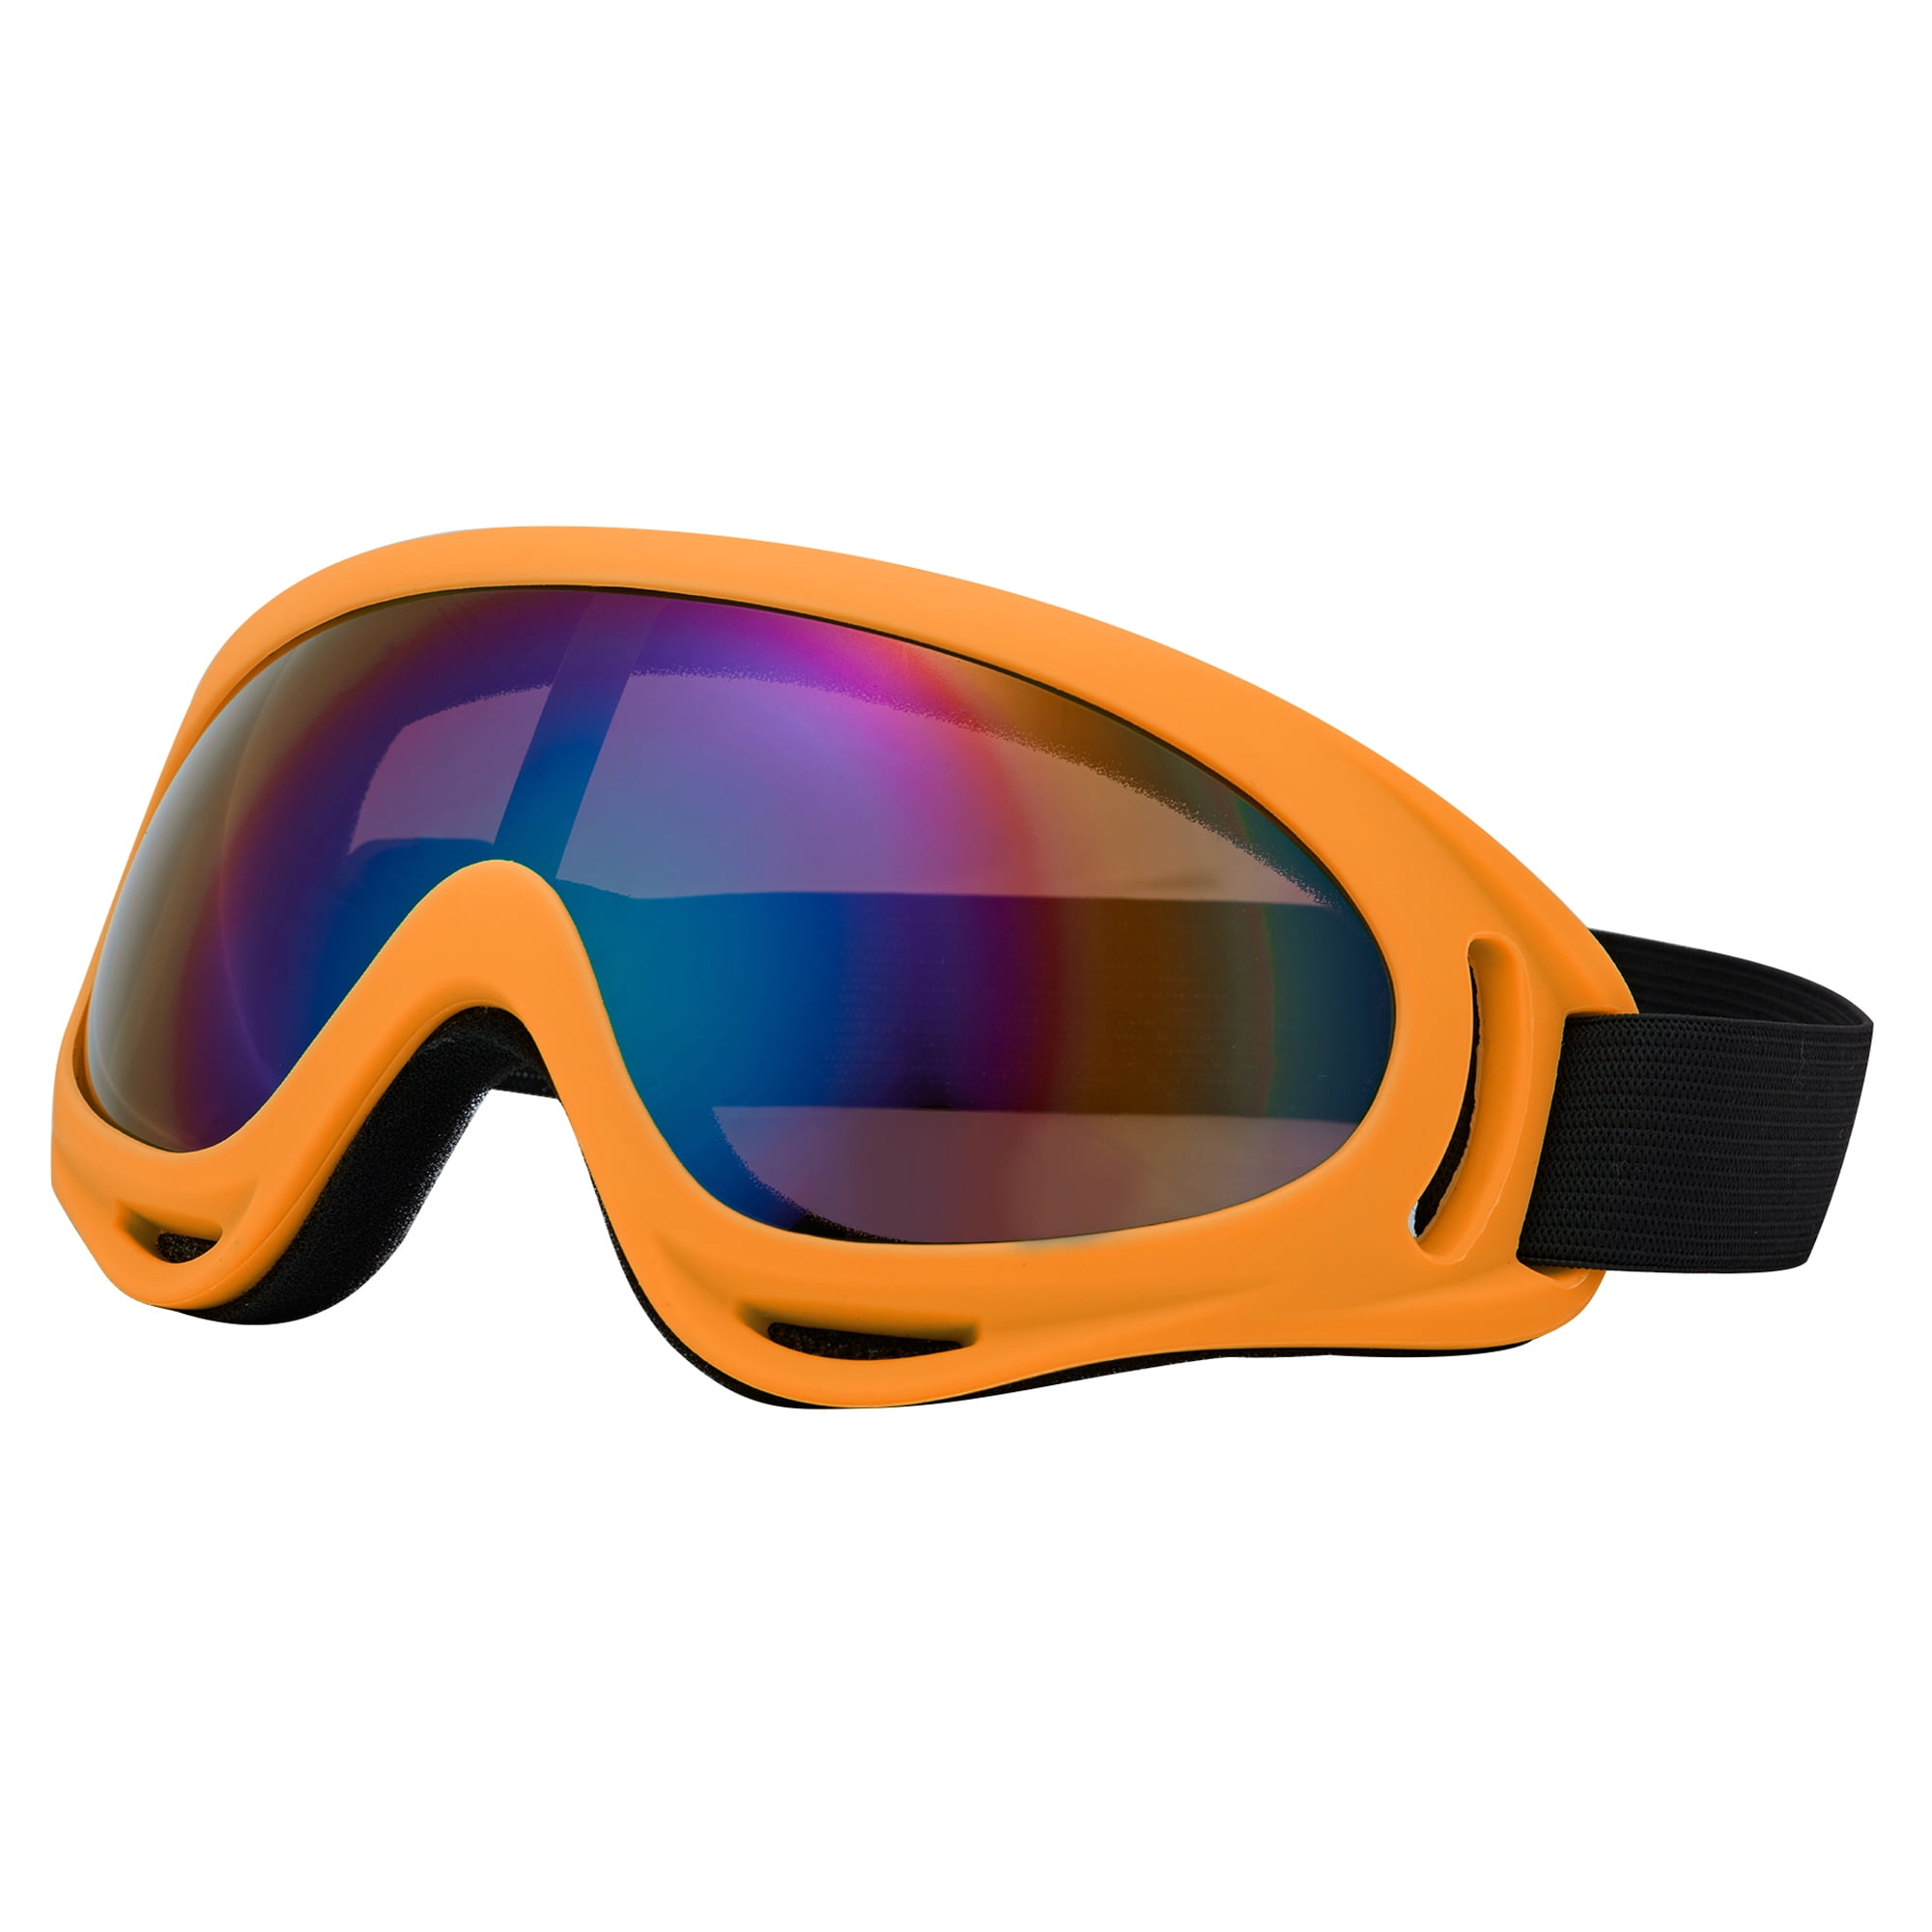 Ski Goggles Anti-fog 2 PCS & Double Lens Black Matt TPU Frame Snowboard Goggles 